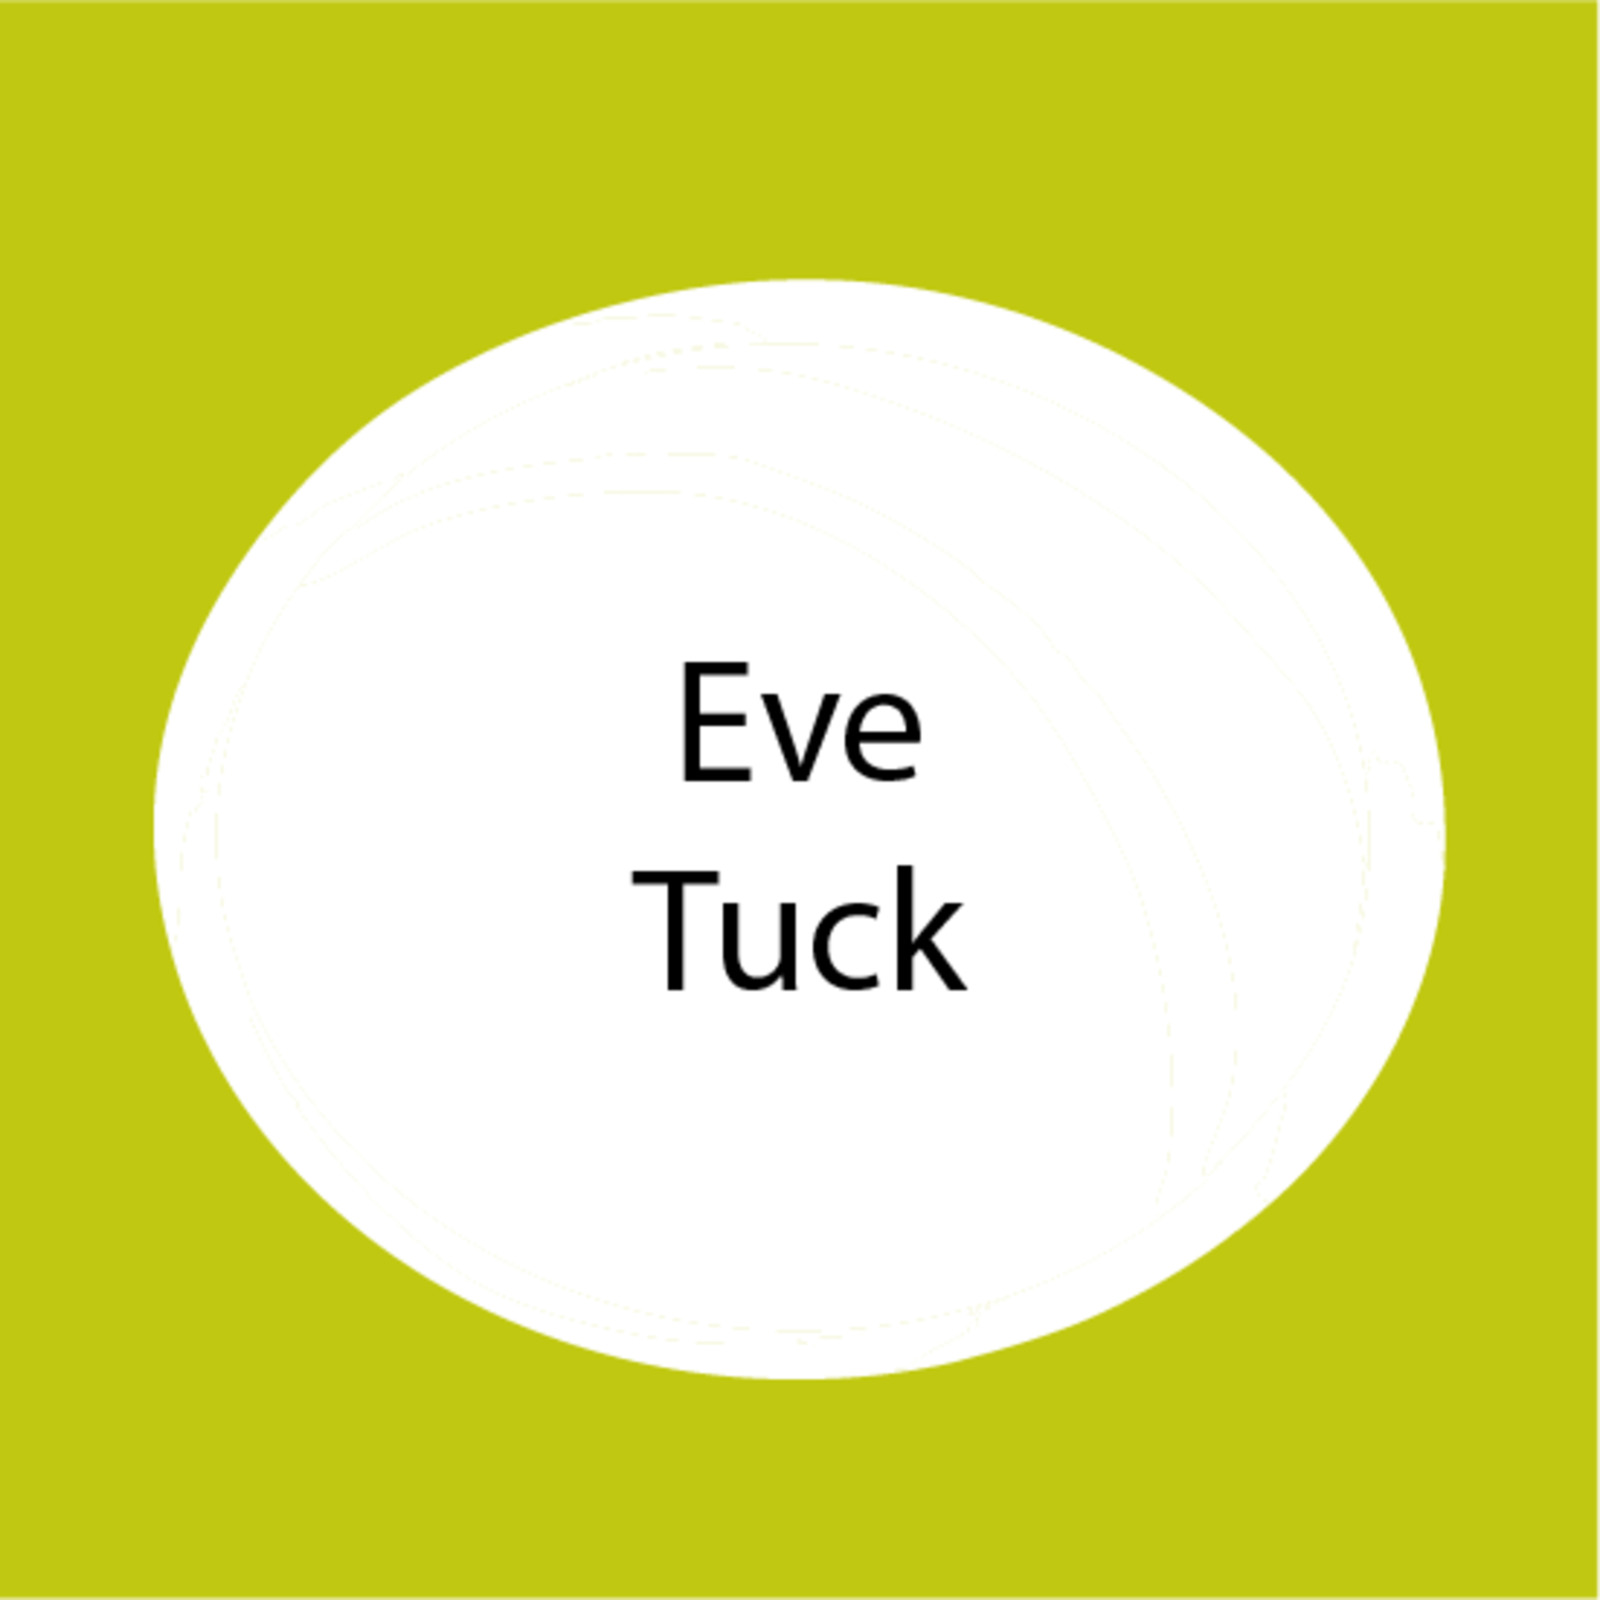 Eve Tuck